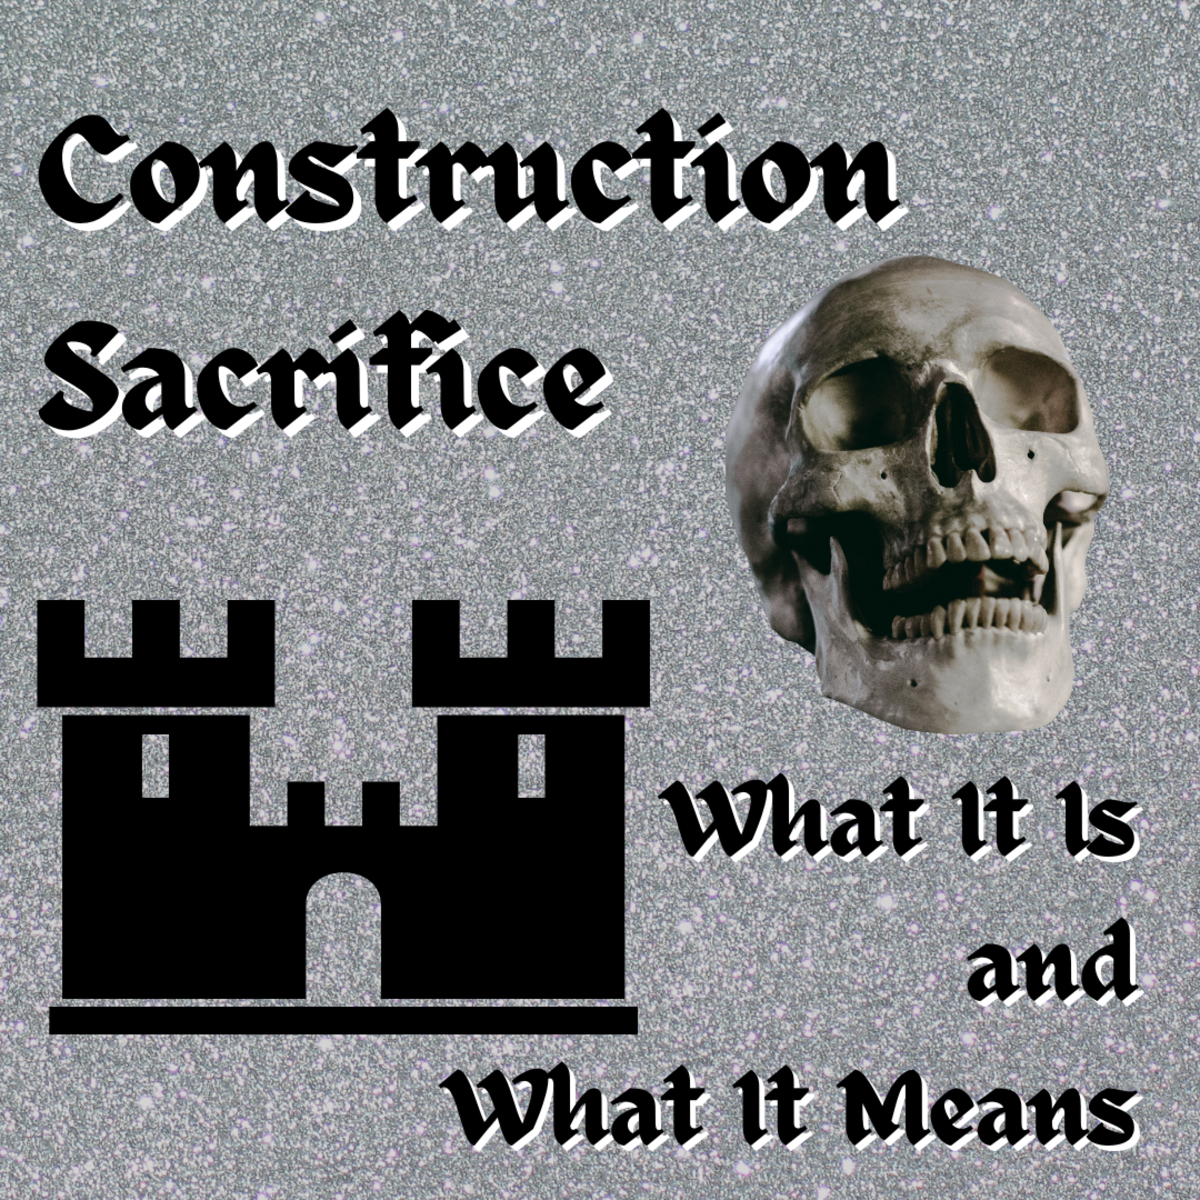 What Is Construction Sacrifice?